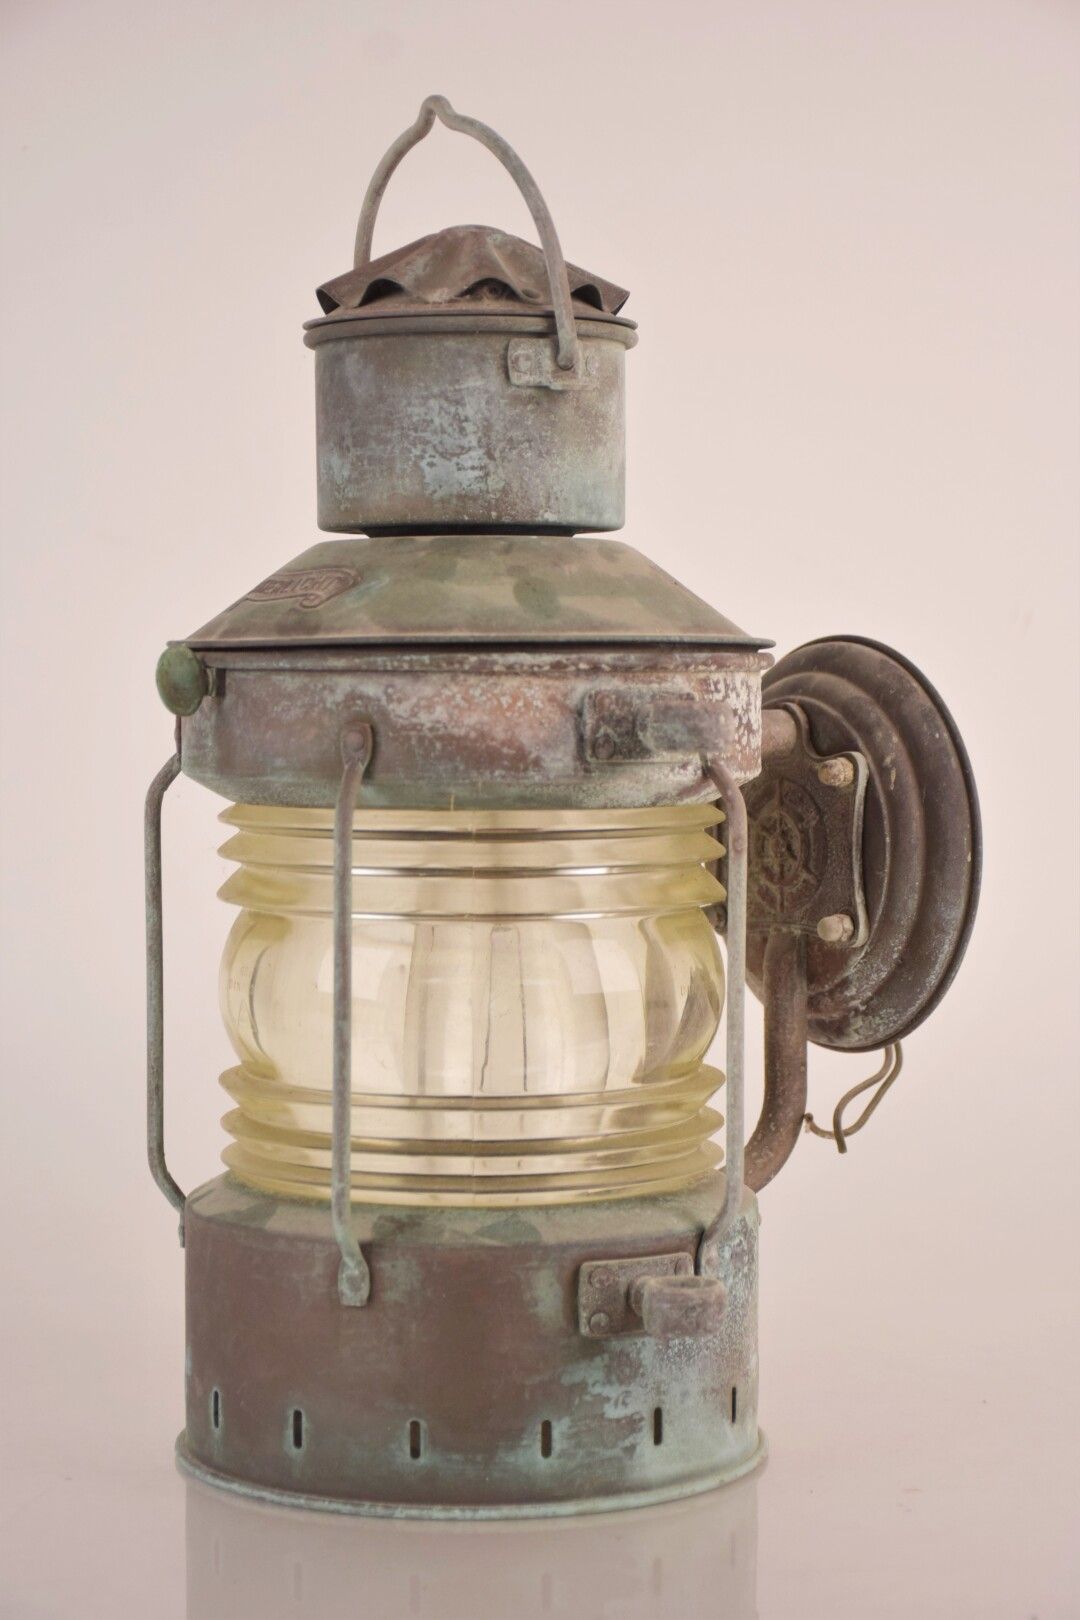 Null 铜灯笼，顶部标有 "ANKERLICHT "字样

(重度氧化)

高度：41厘米 - 宽度：23厘米 - 深度：25厘米